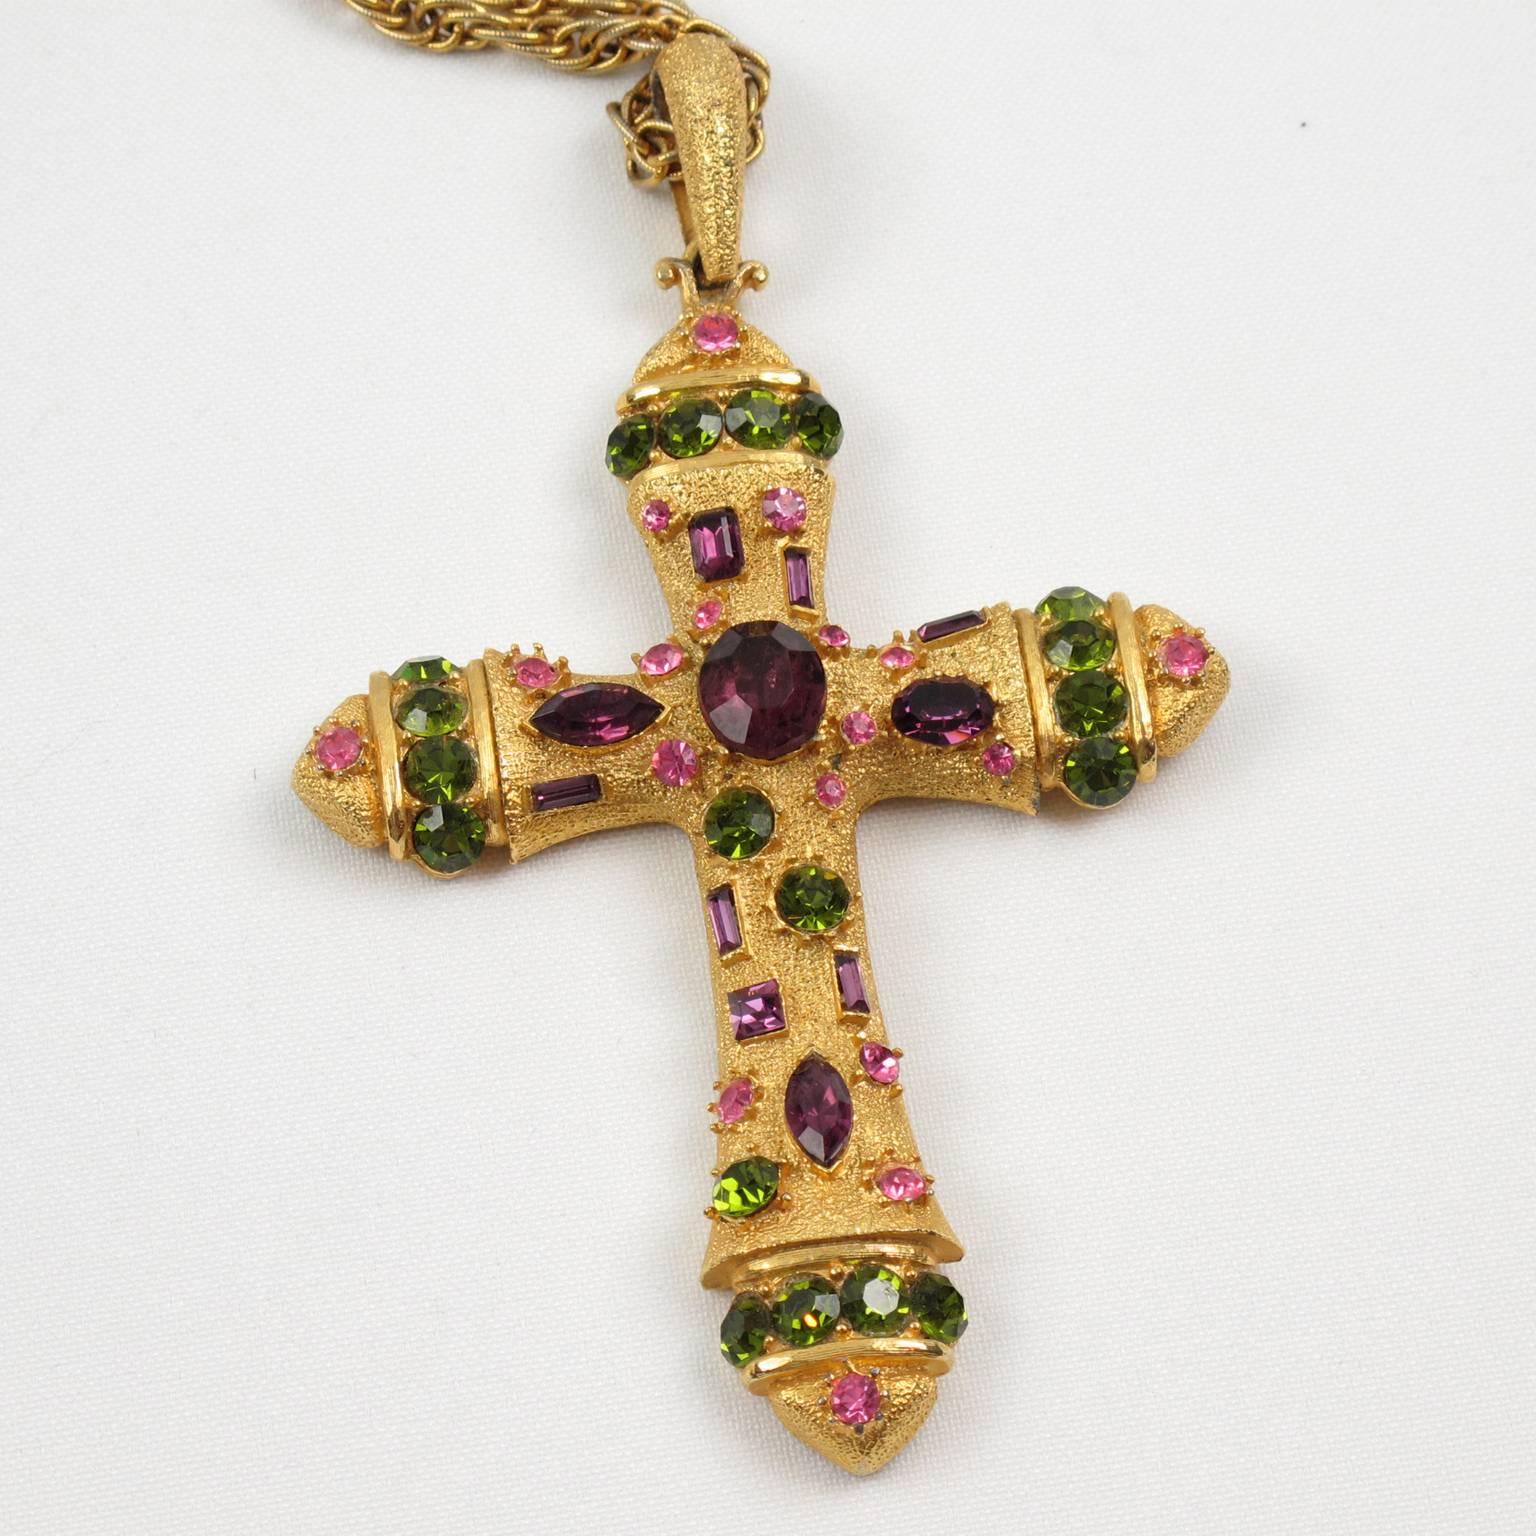 Baroque Revival Massive Jeweled Gilt Metal Cross Pendant Necklace Purple and Green Rhinestones